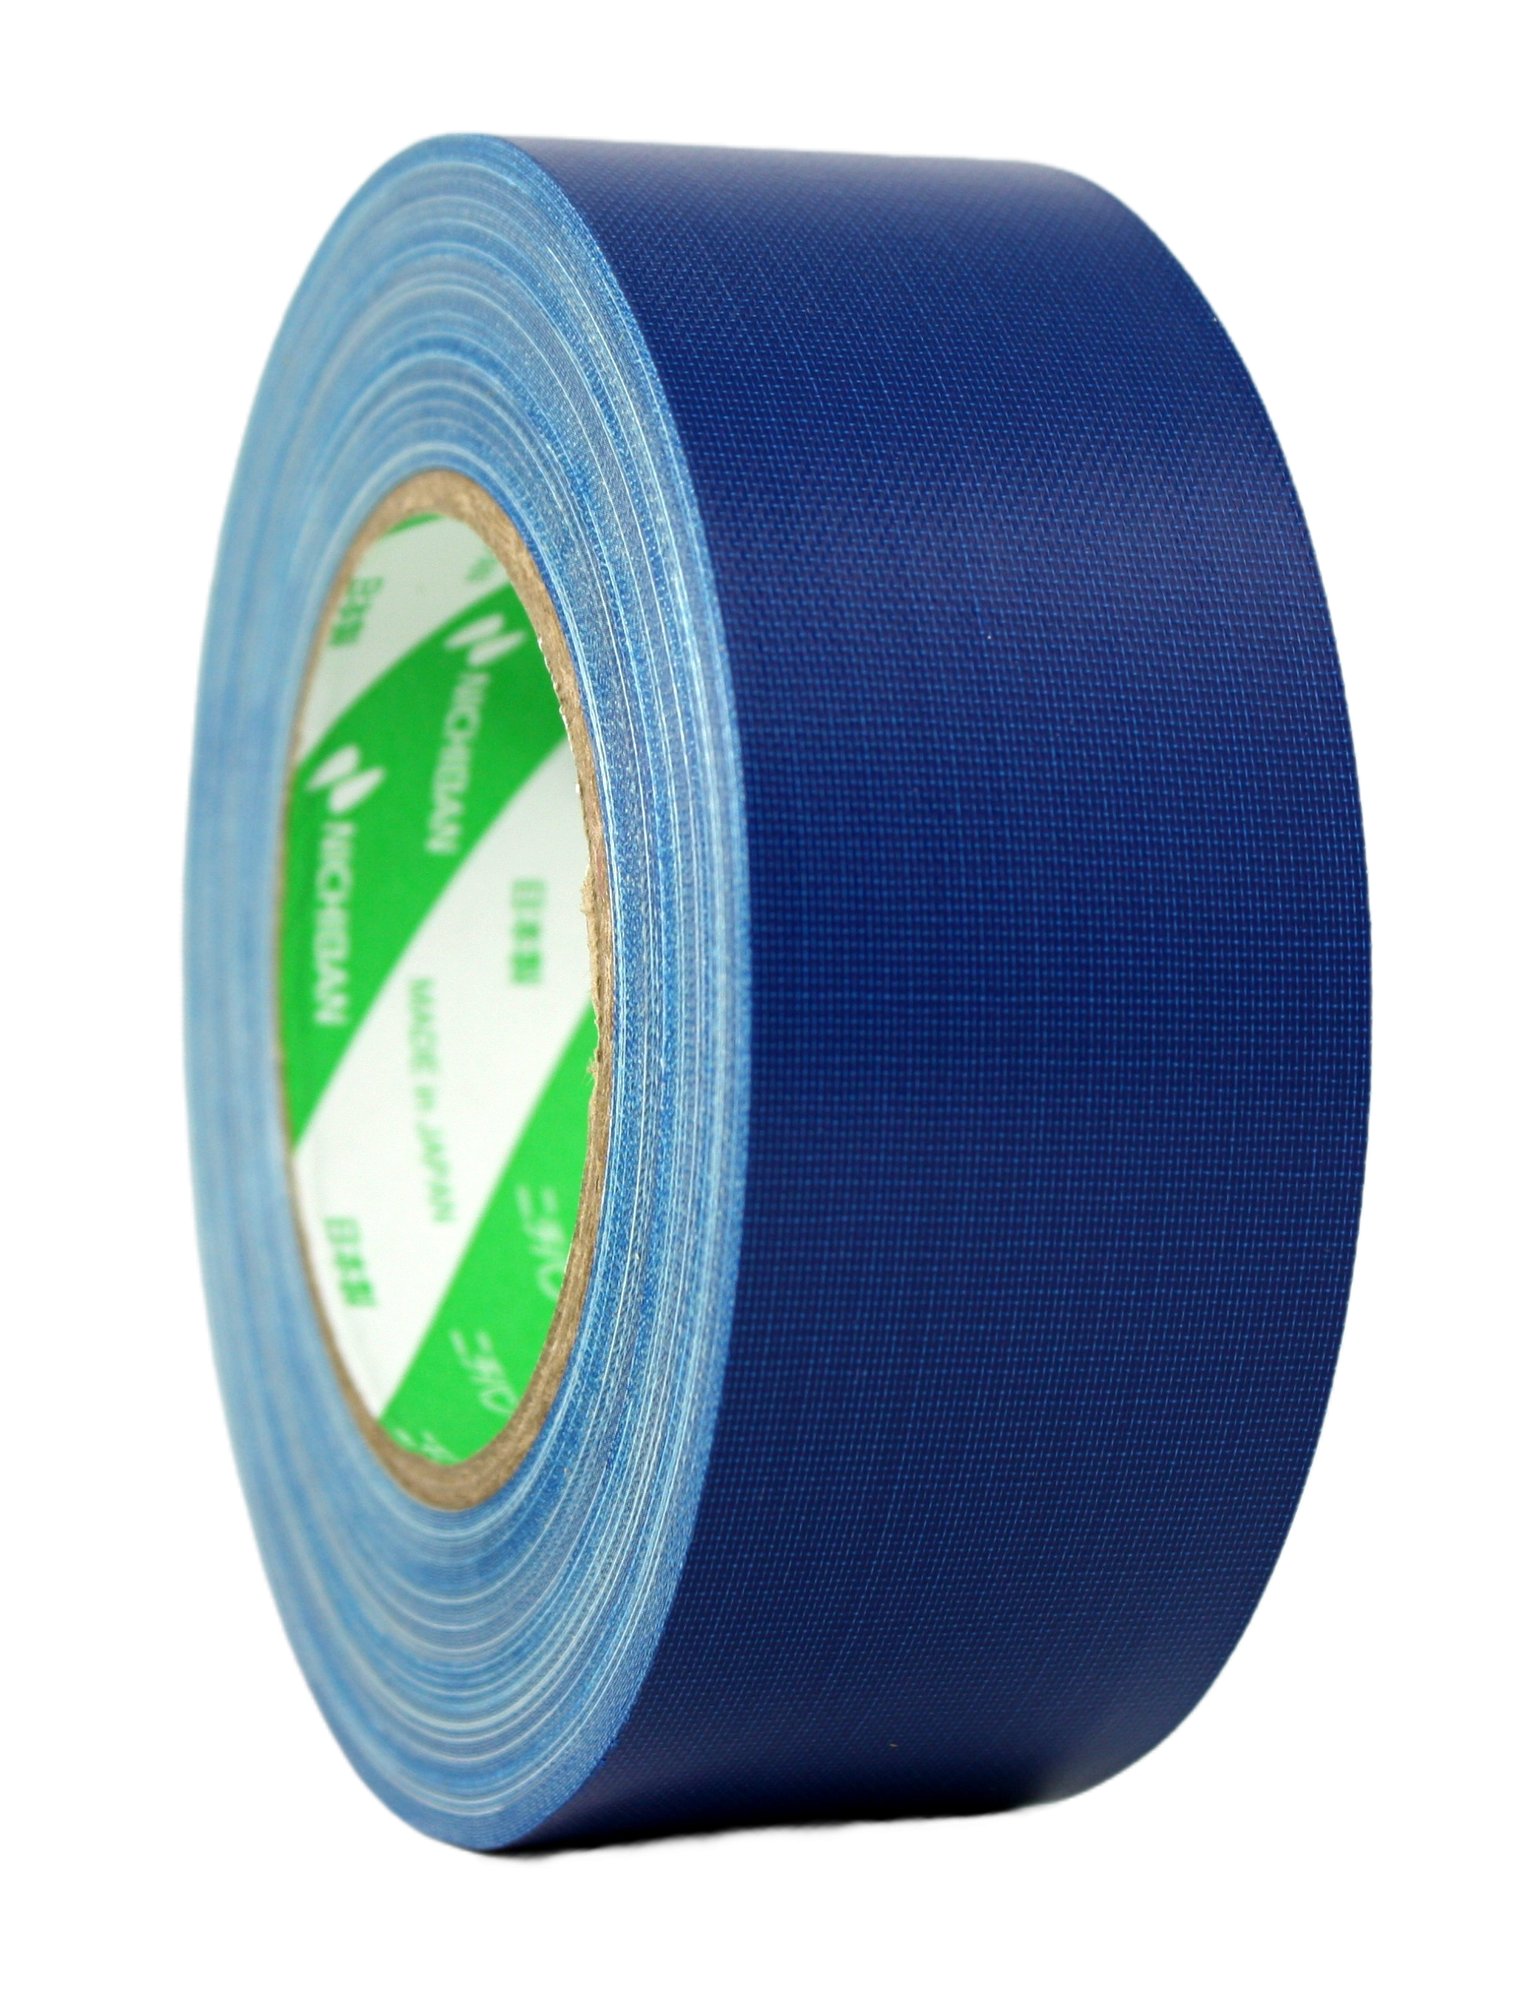 Nichiban Blue Gaff Tape, 2" roll, side view